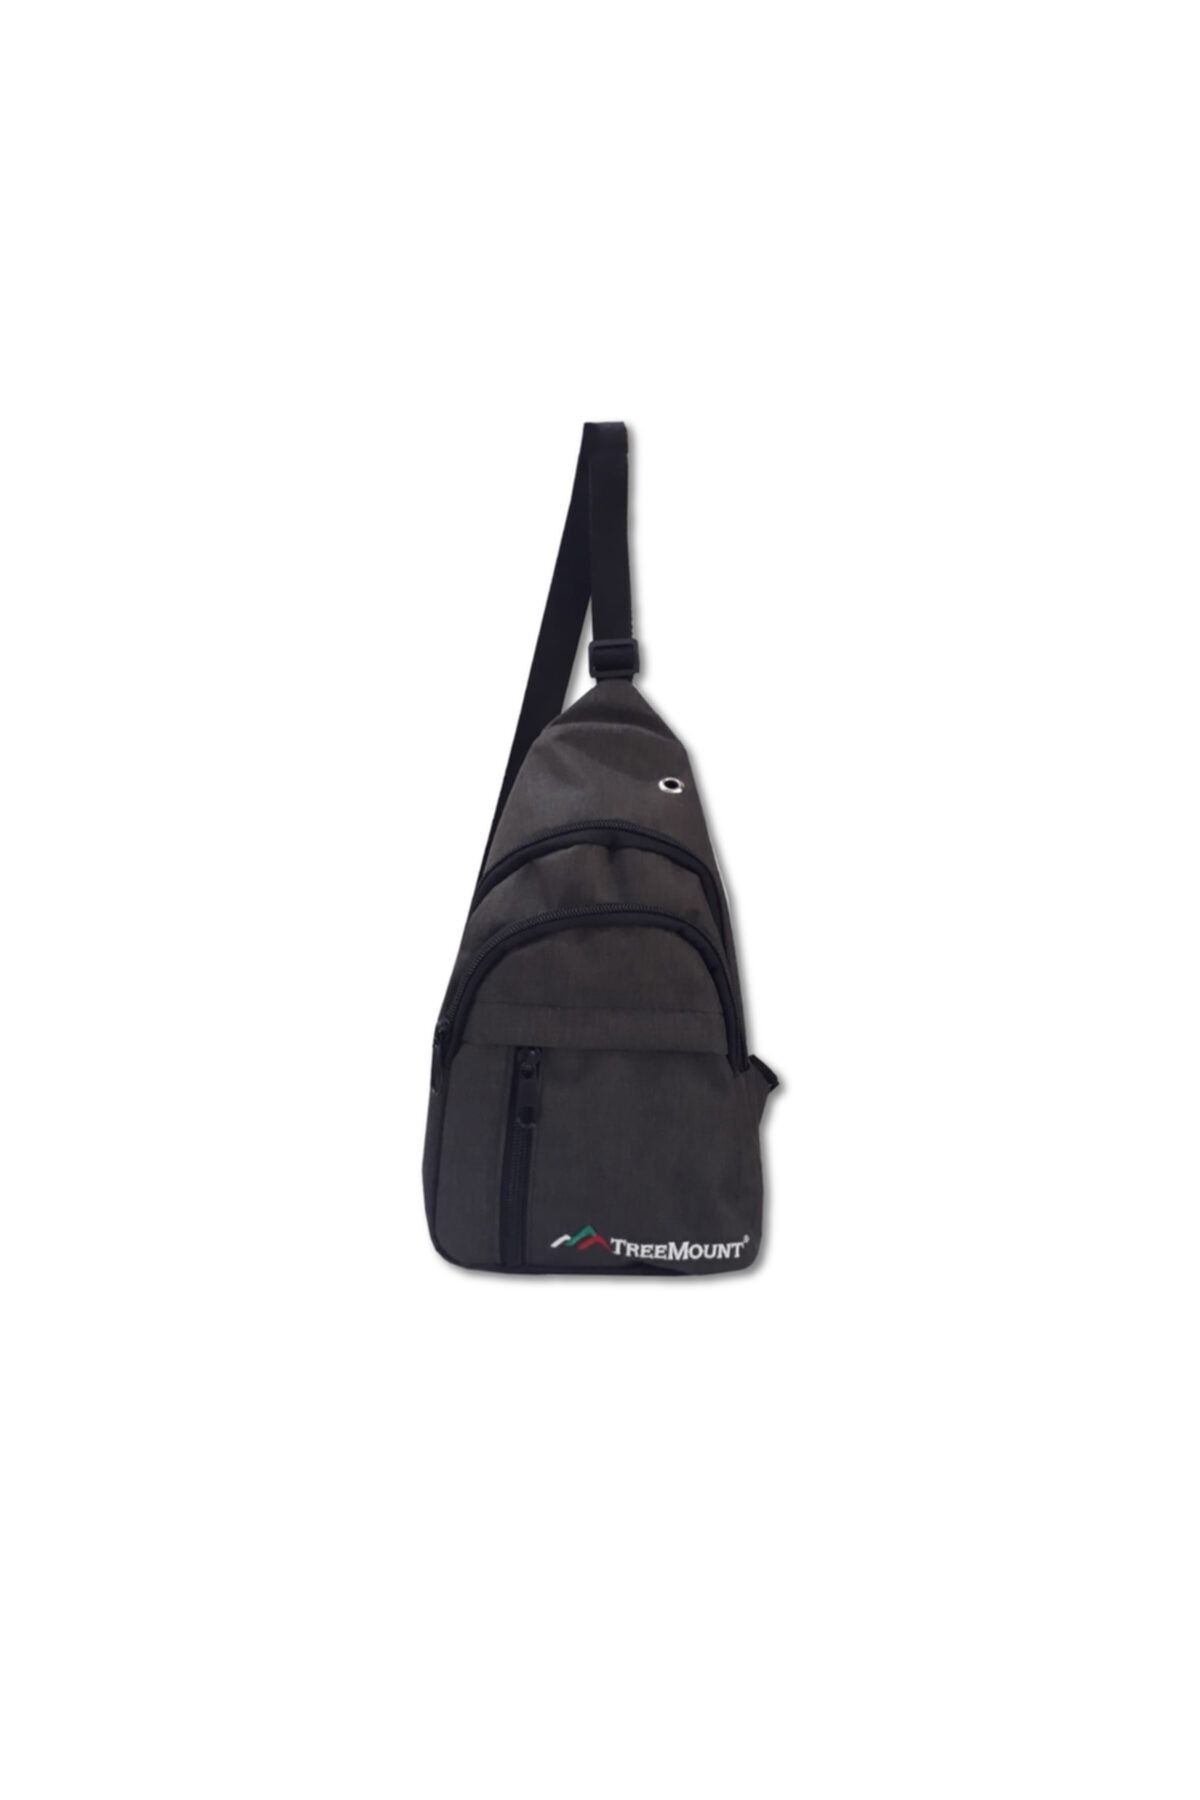 Ersav T-mount Bady Bag